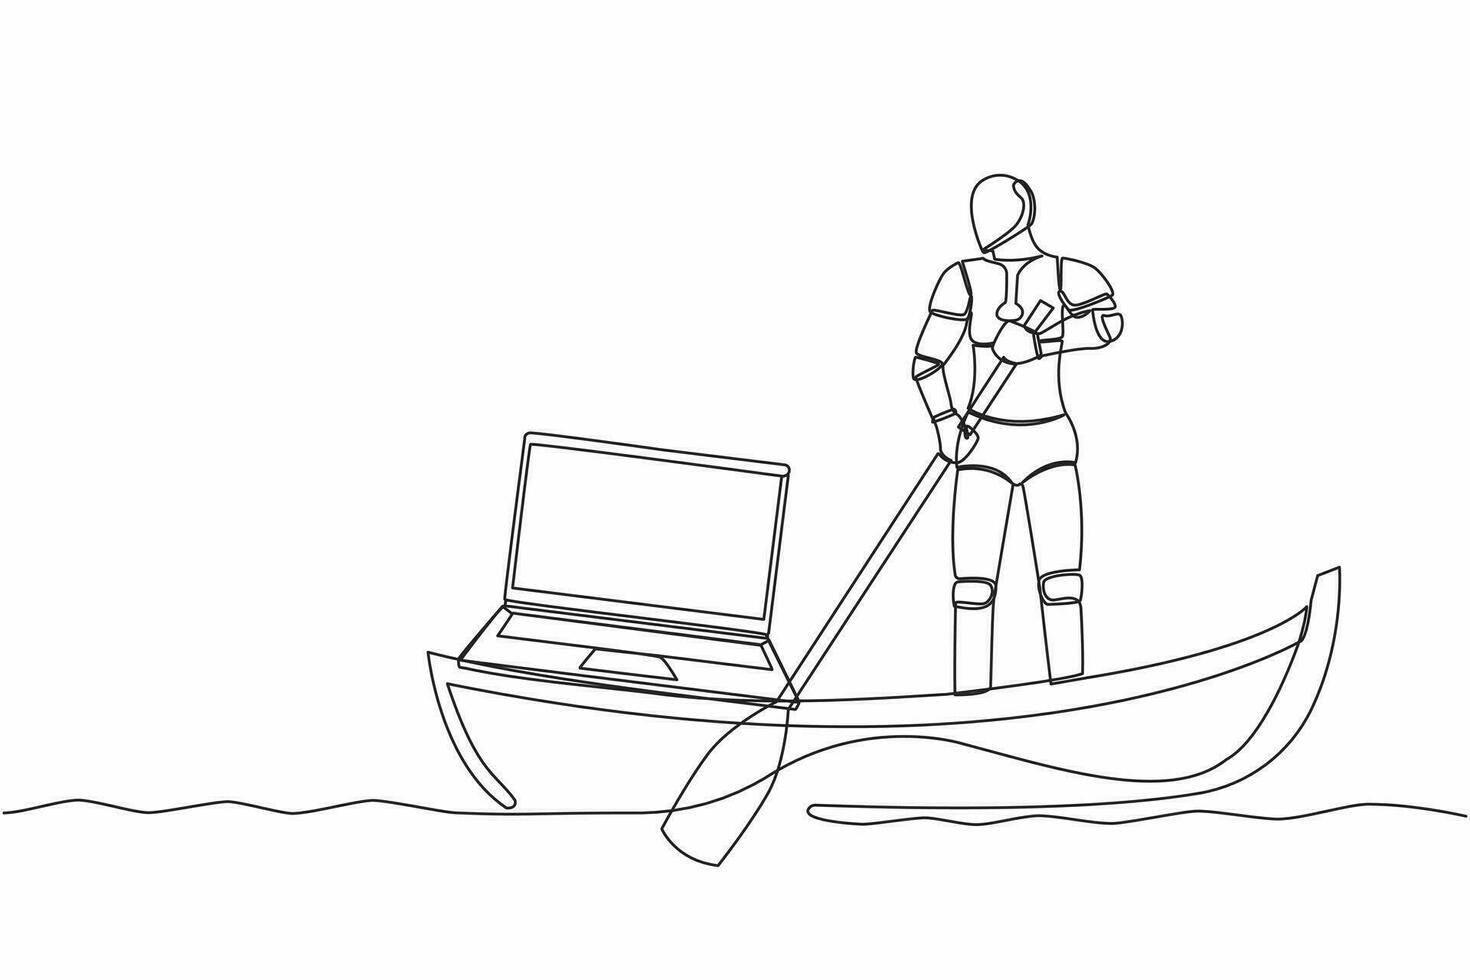 soltero uno línea dibujo de robot navegación lejos en barco con ordenador portátil computadora. Lanza libre o remoto trabajo a barco. moderno robótico artificial inteligencia. continuo línea diseño gráfico vector ilustración